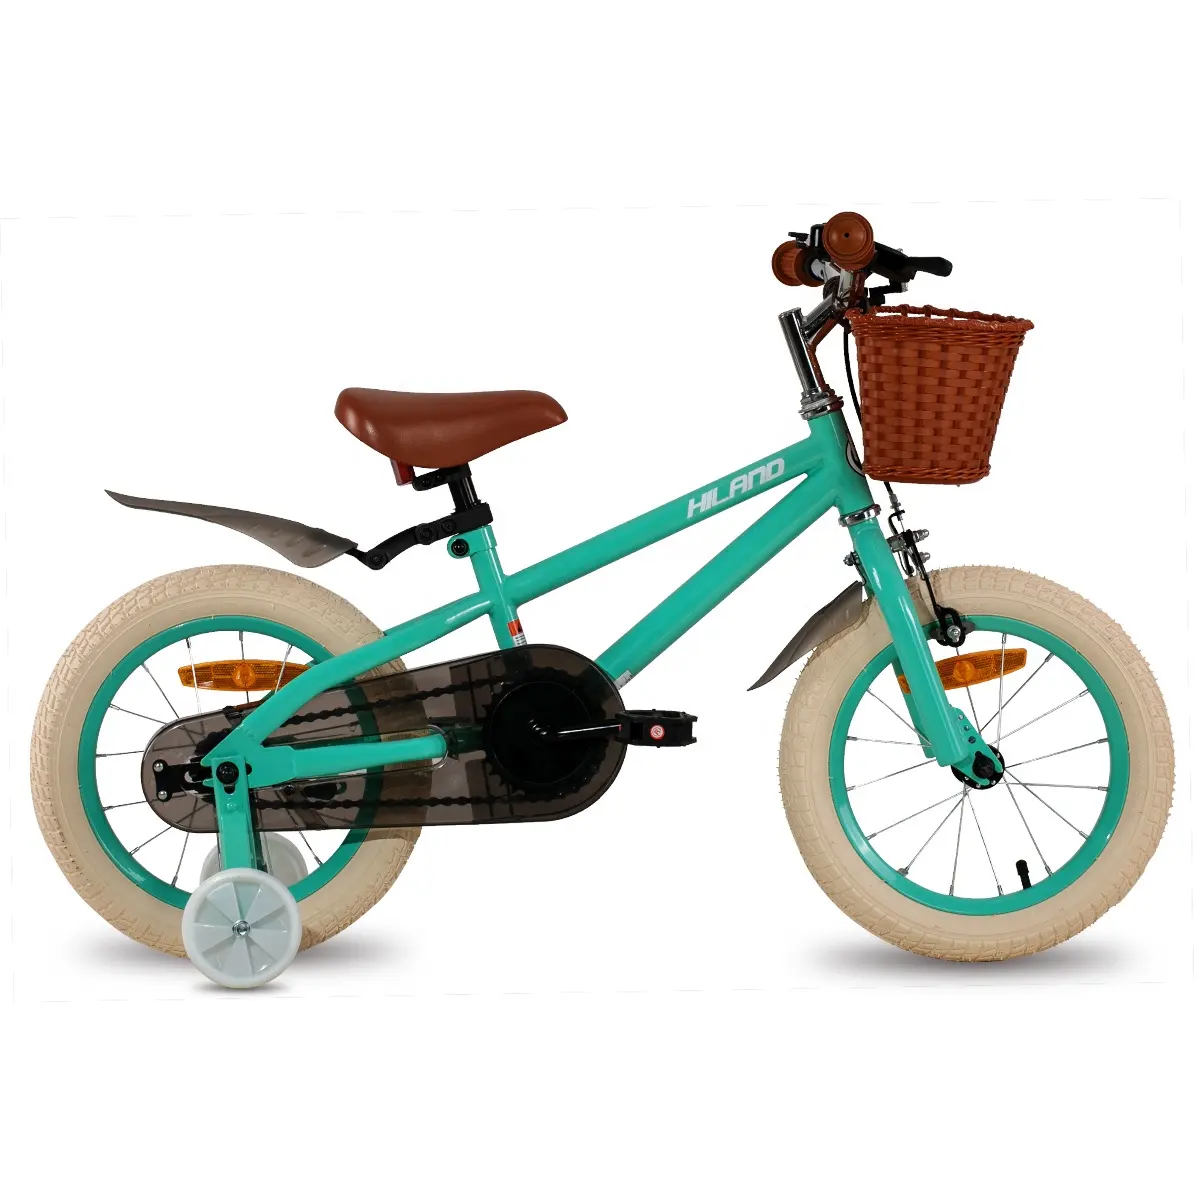 JOYKIE Diskon Pabrik Sepeda BMX Mini 12 14 16 18 Inci, Sepeda Anak Baru 2020